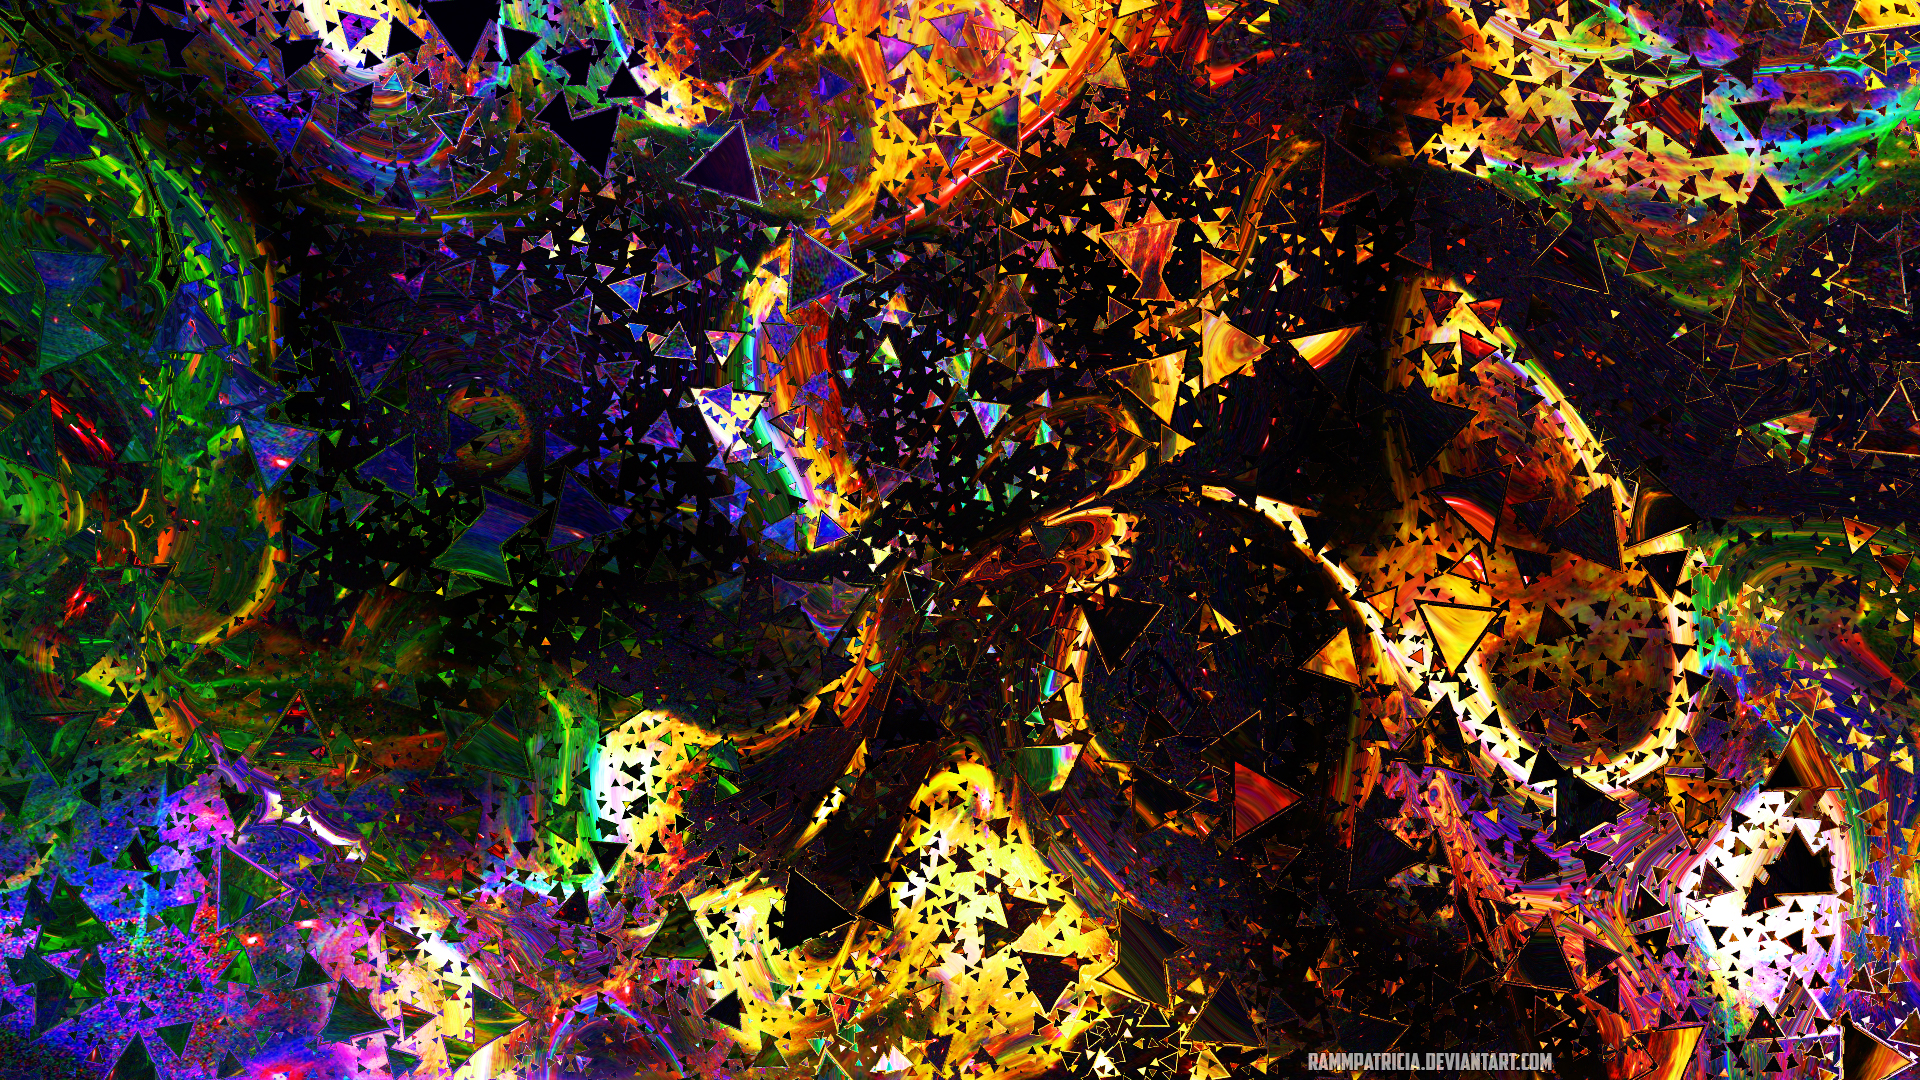 Abstract RammPatricia Digital Art Digital Colorful 1920x1080